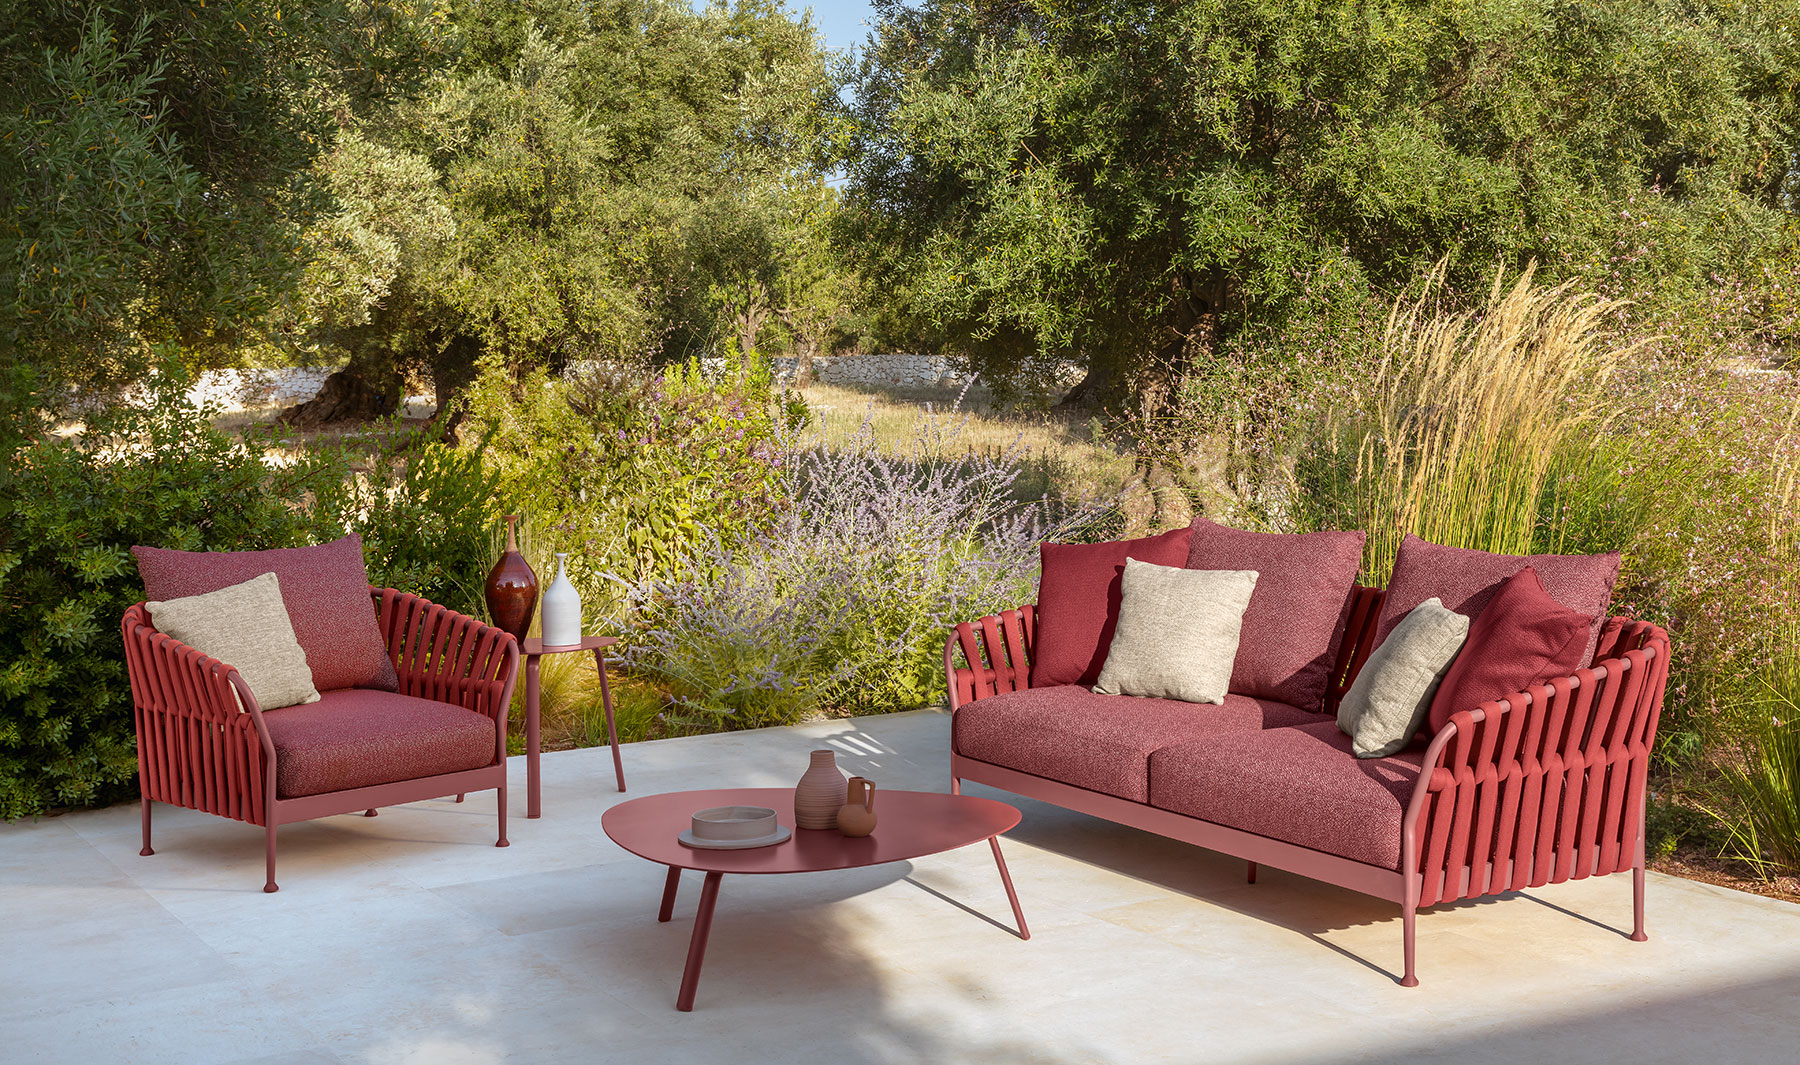 https://www.italydreamdesign.com/wp-content/uploads/Fabric-salotto-da-esterno-rosso-salon-de-jardin-rouge-design-red-outdoor-sofa-and-armchair.jpg